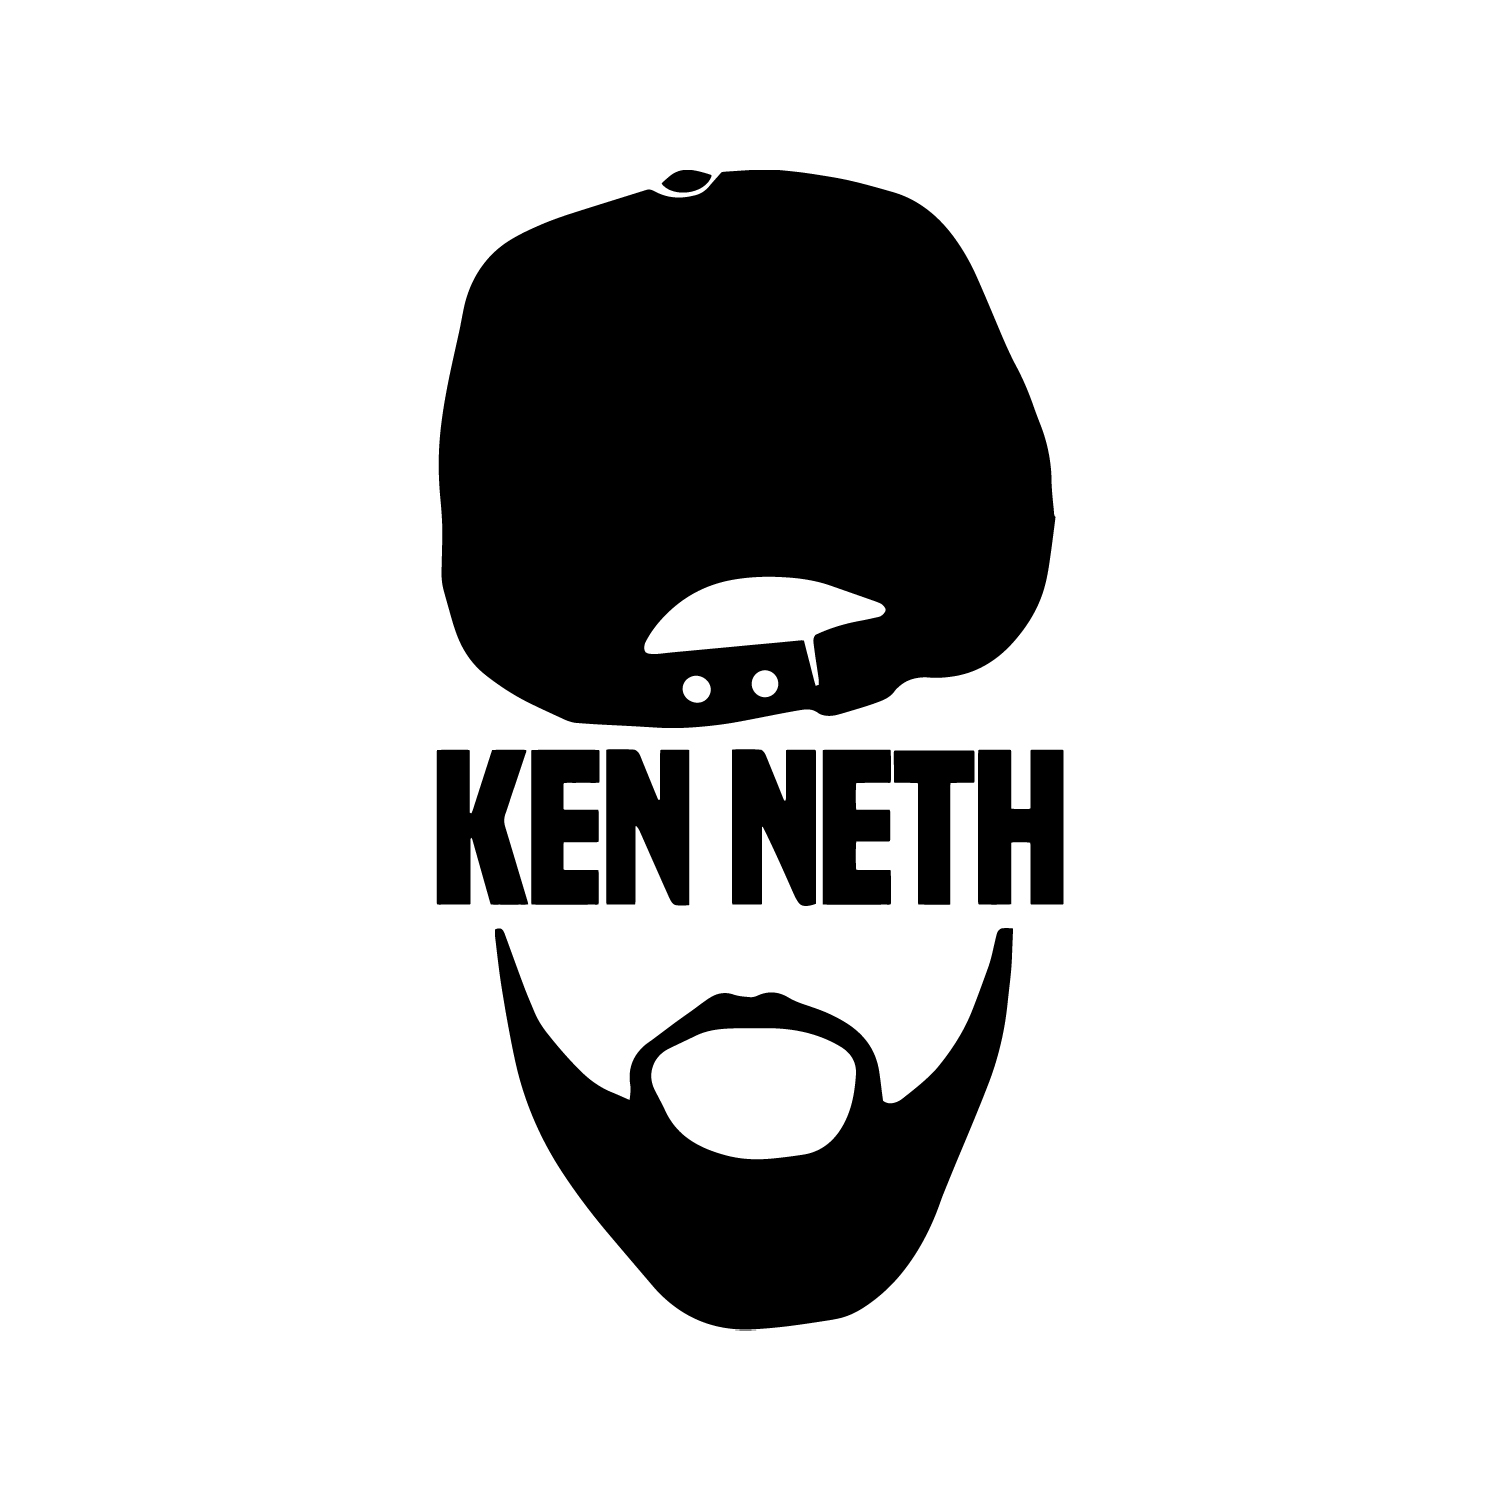 Ken Neth logo.jpg